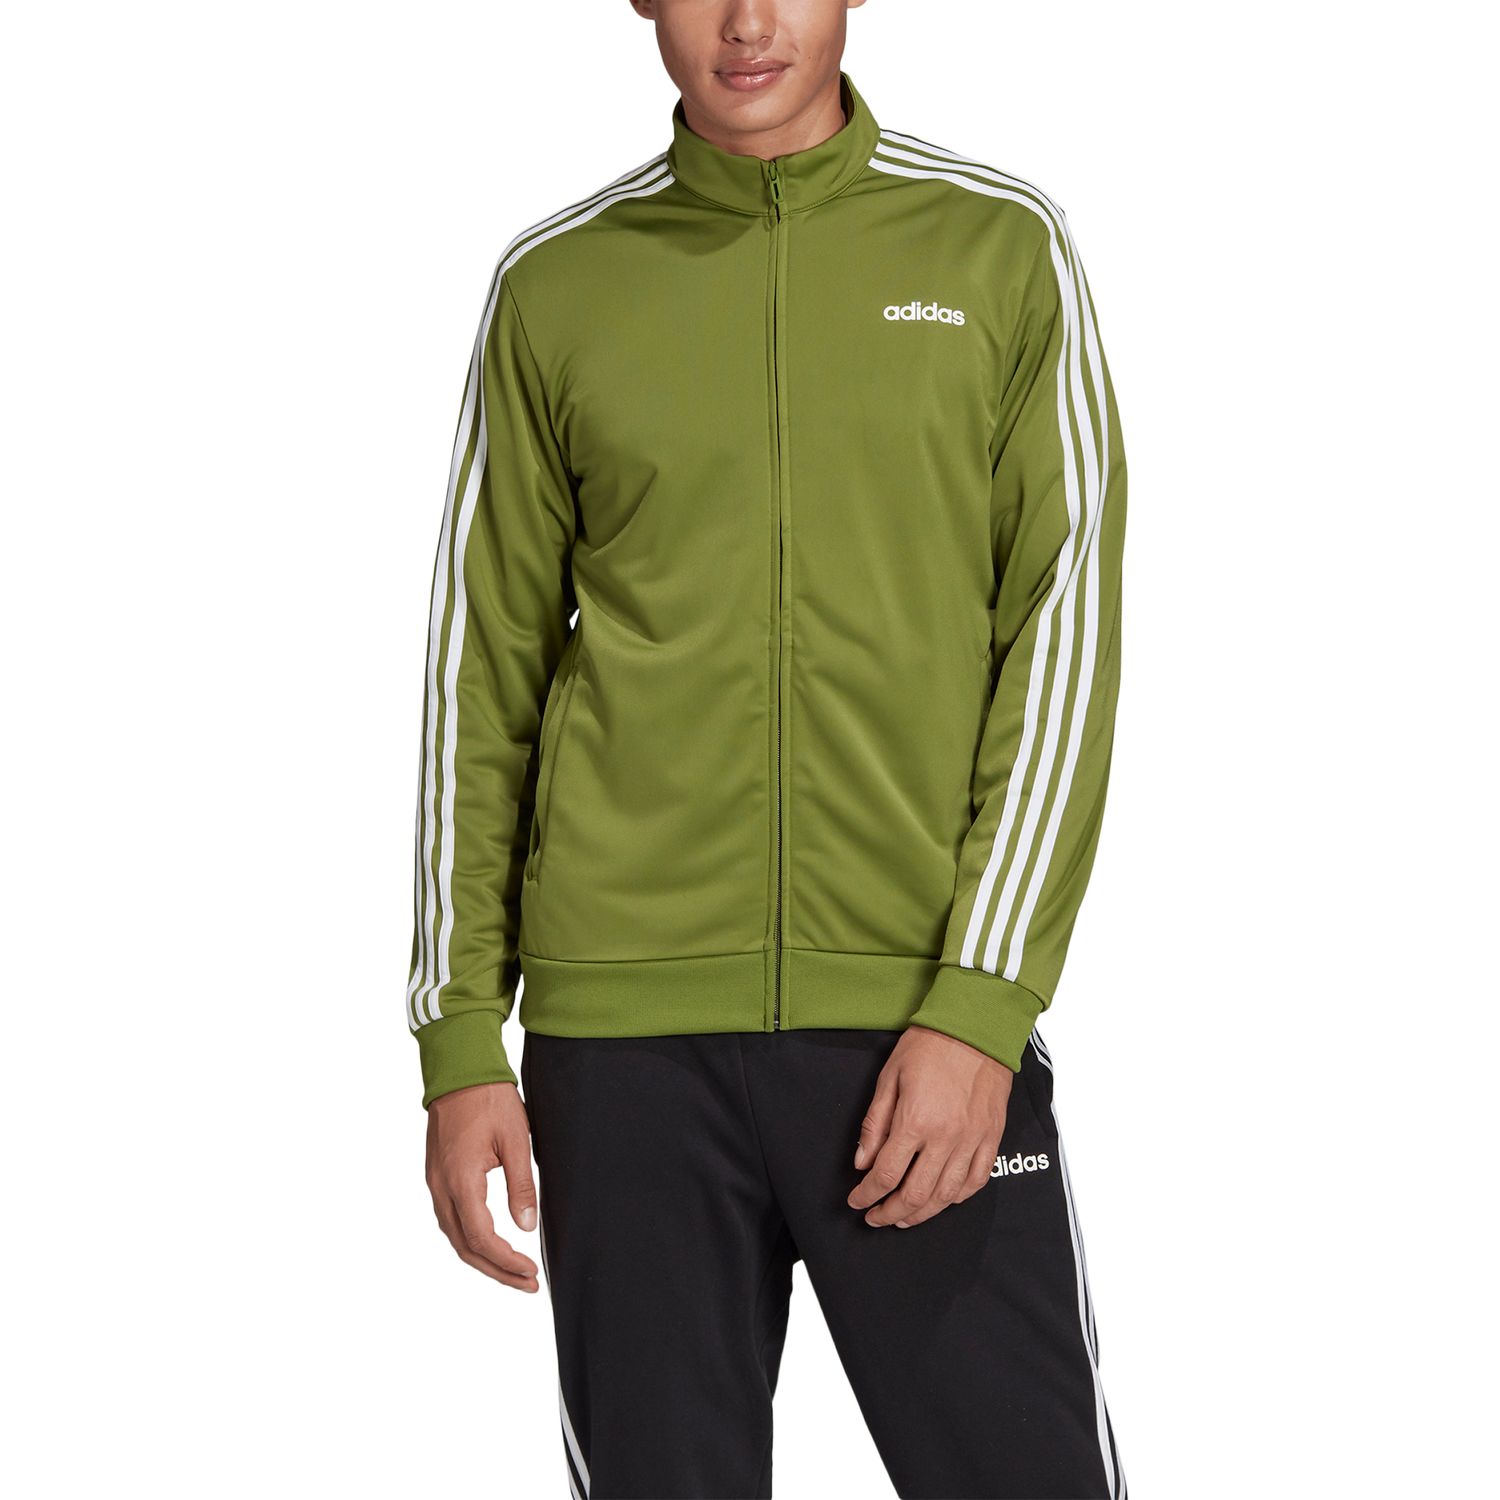 adidas men's tricot track jacket